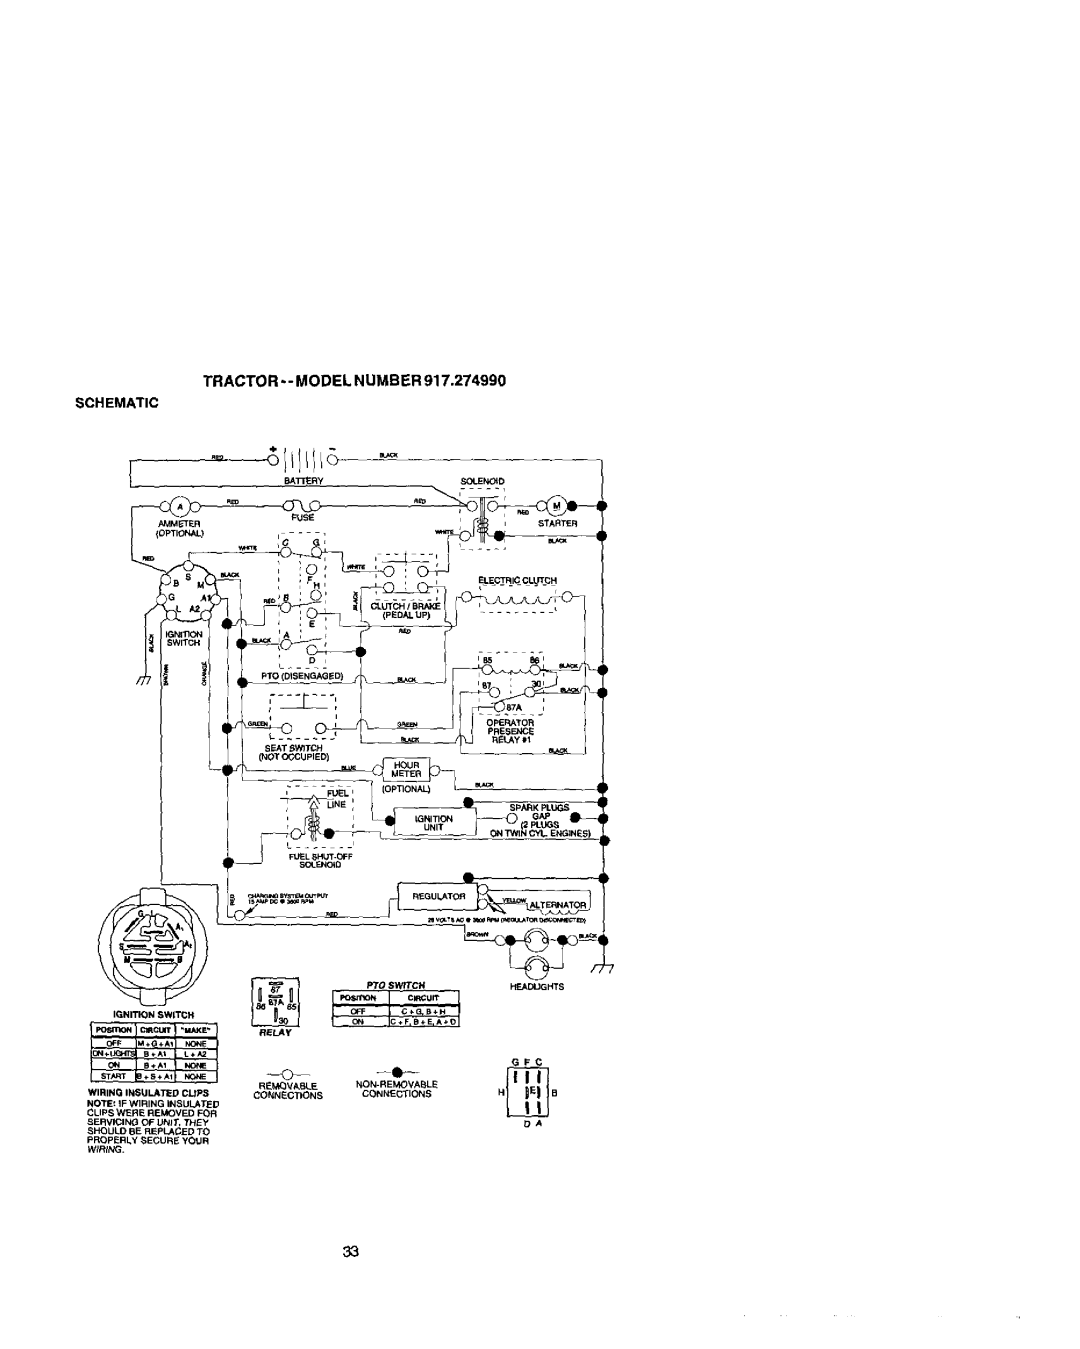 Craftsman 917.27499 manual Tt AGTOP . oDEL HU 6 -P9Lt 